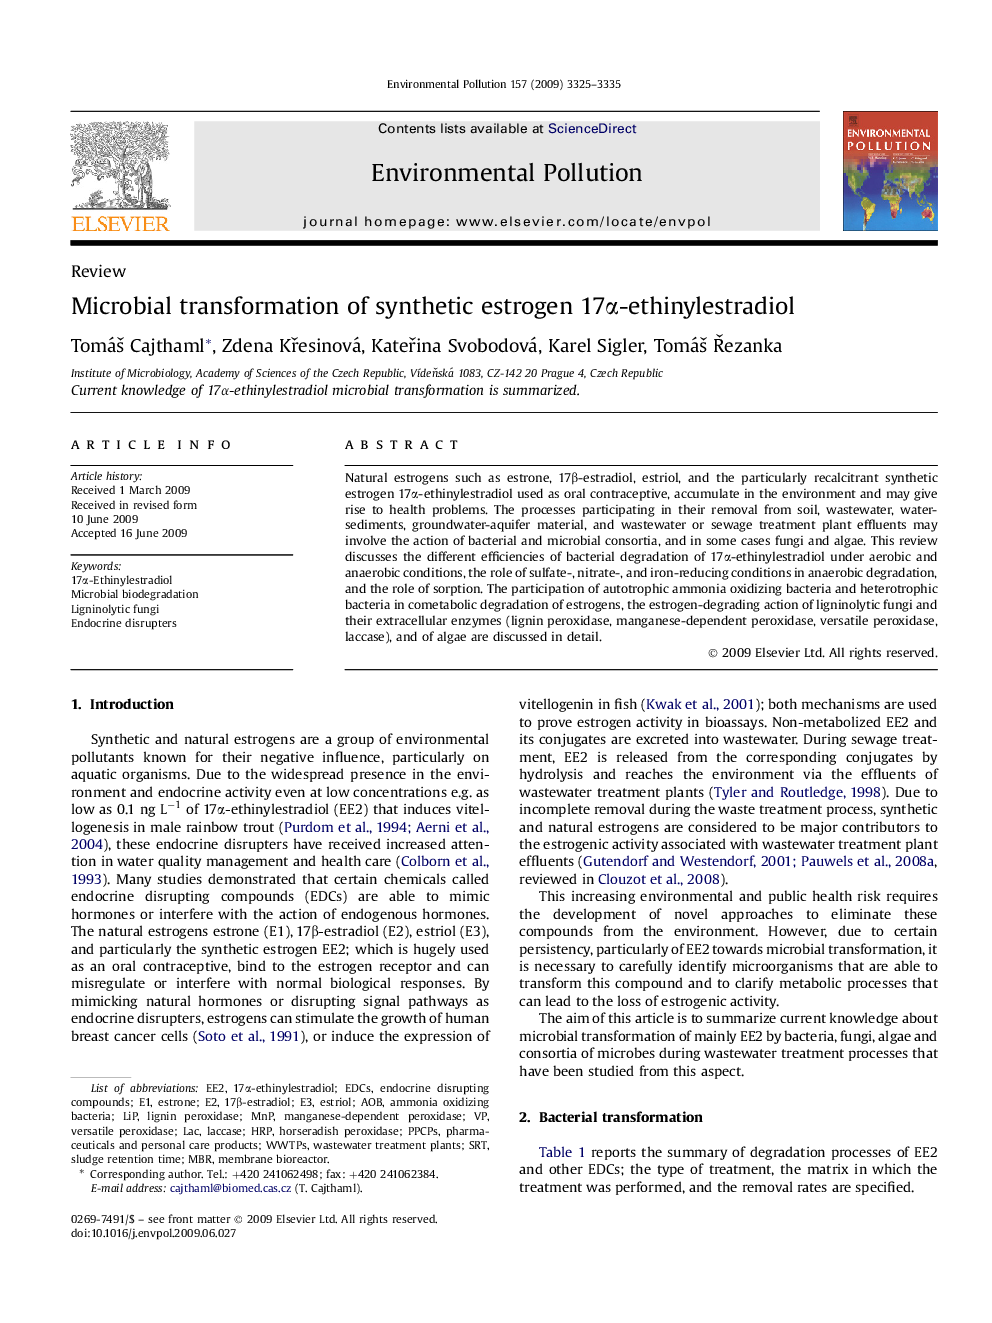 Microbial transformation of synthetic estrogen 17α-ethinylestradiol